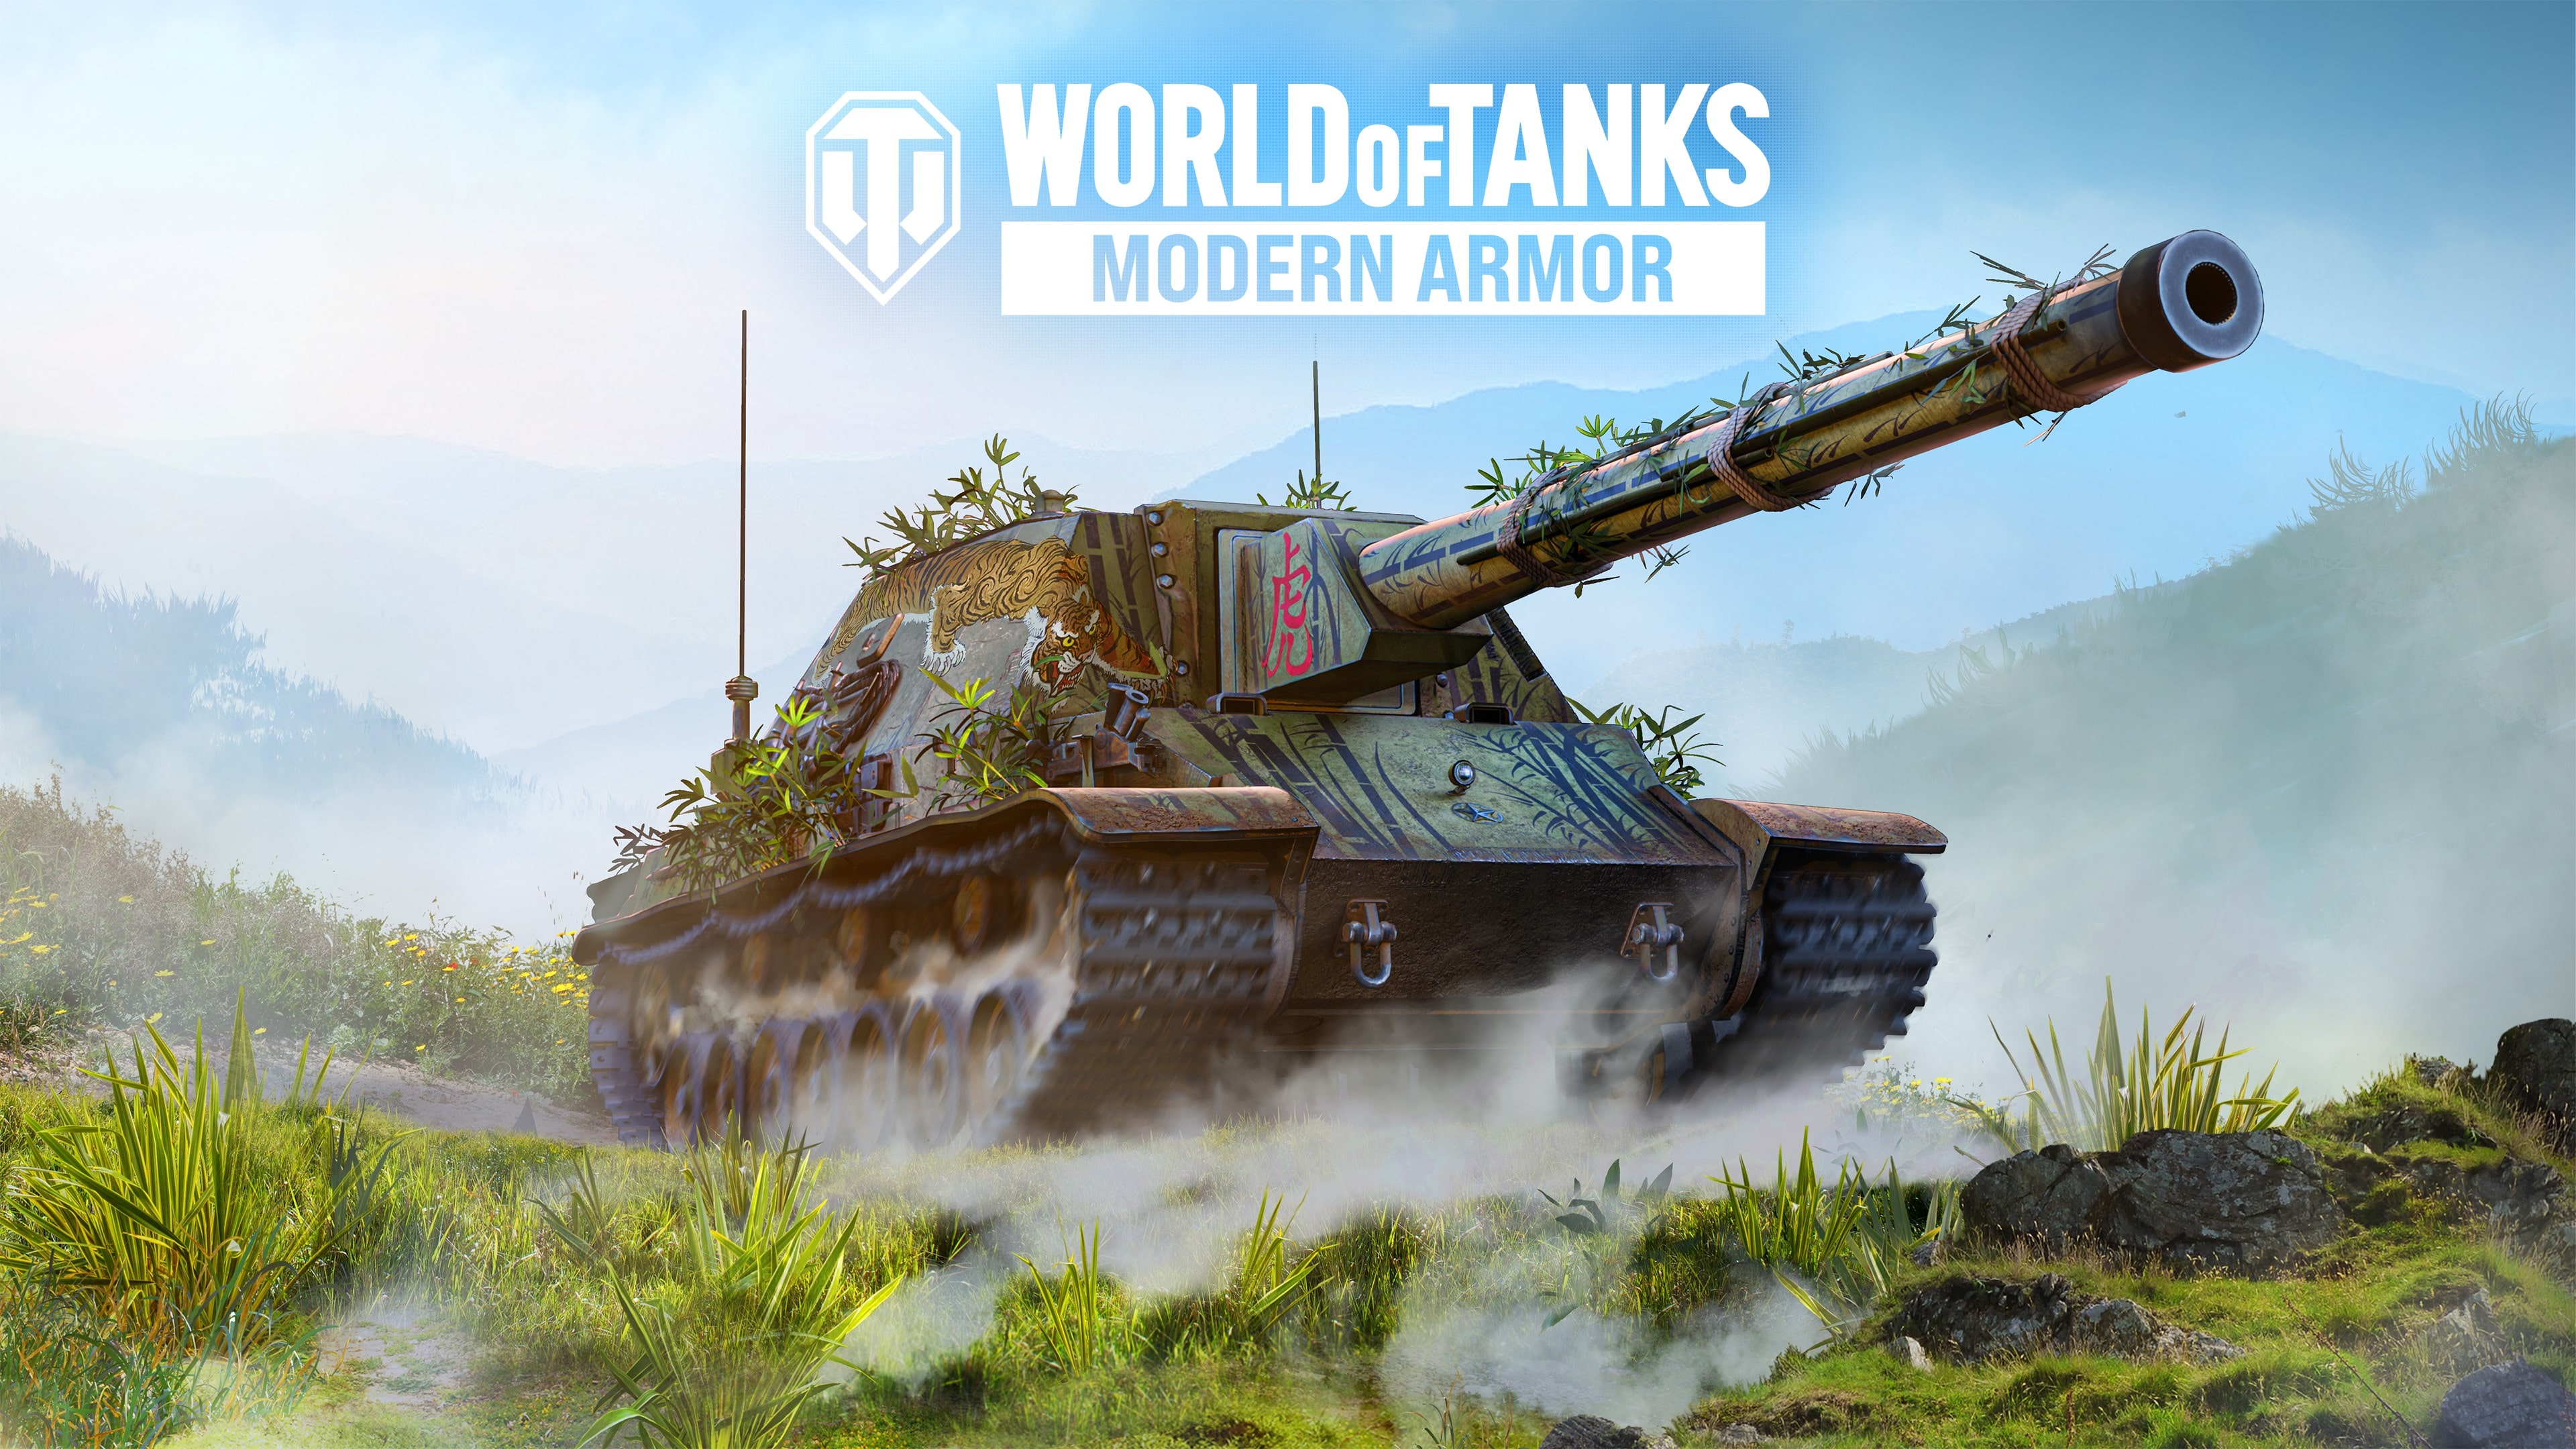 World of Tanks (English, Japanese)